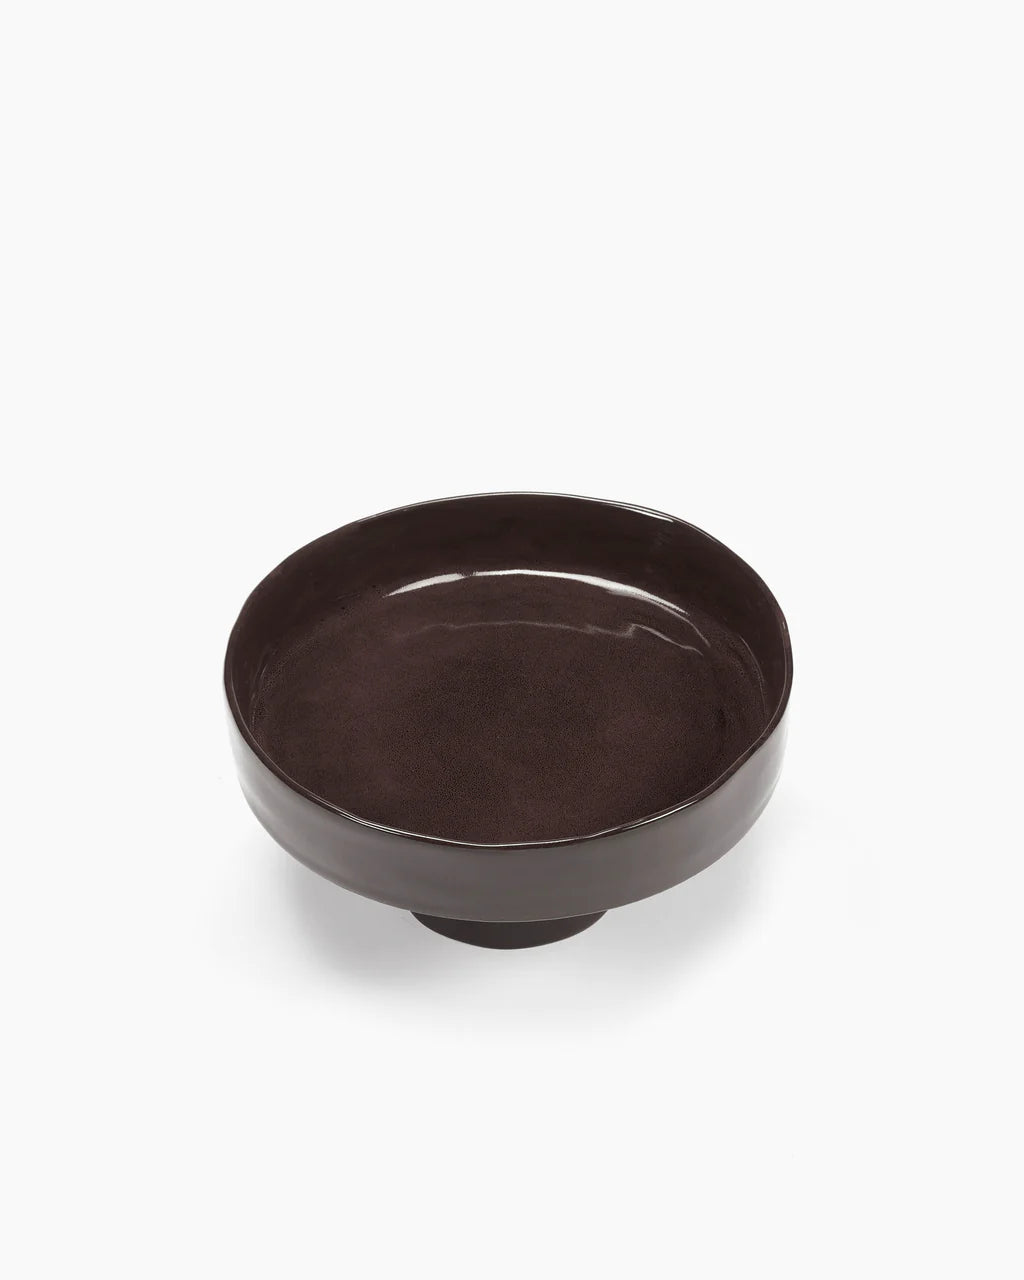 Standing bowl in deep chocolate by Marie Michielssen